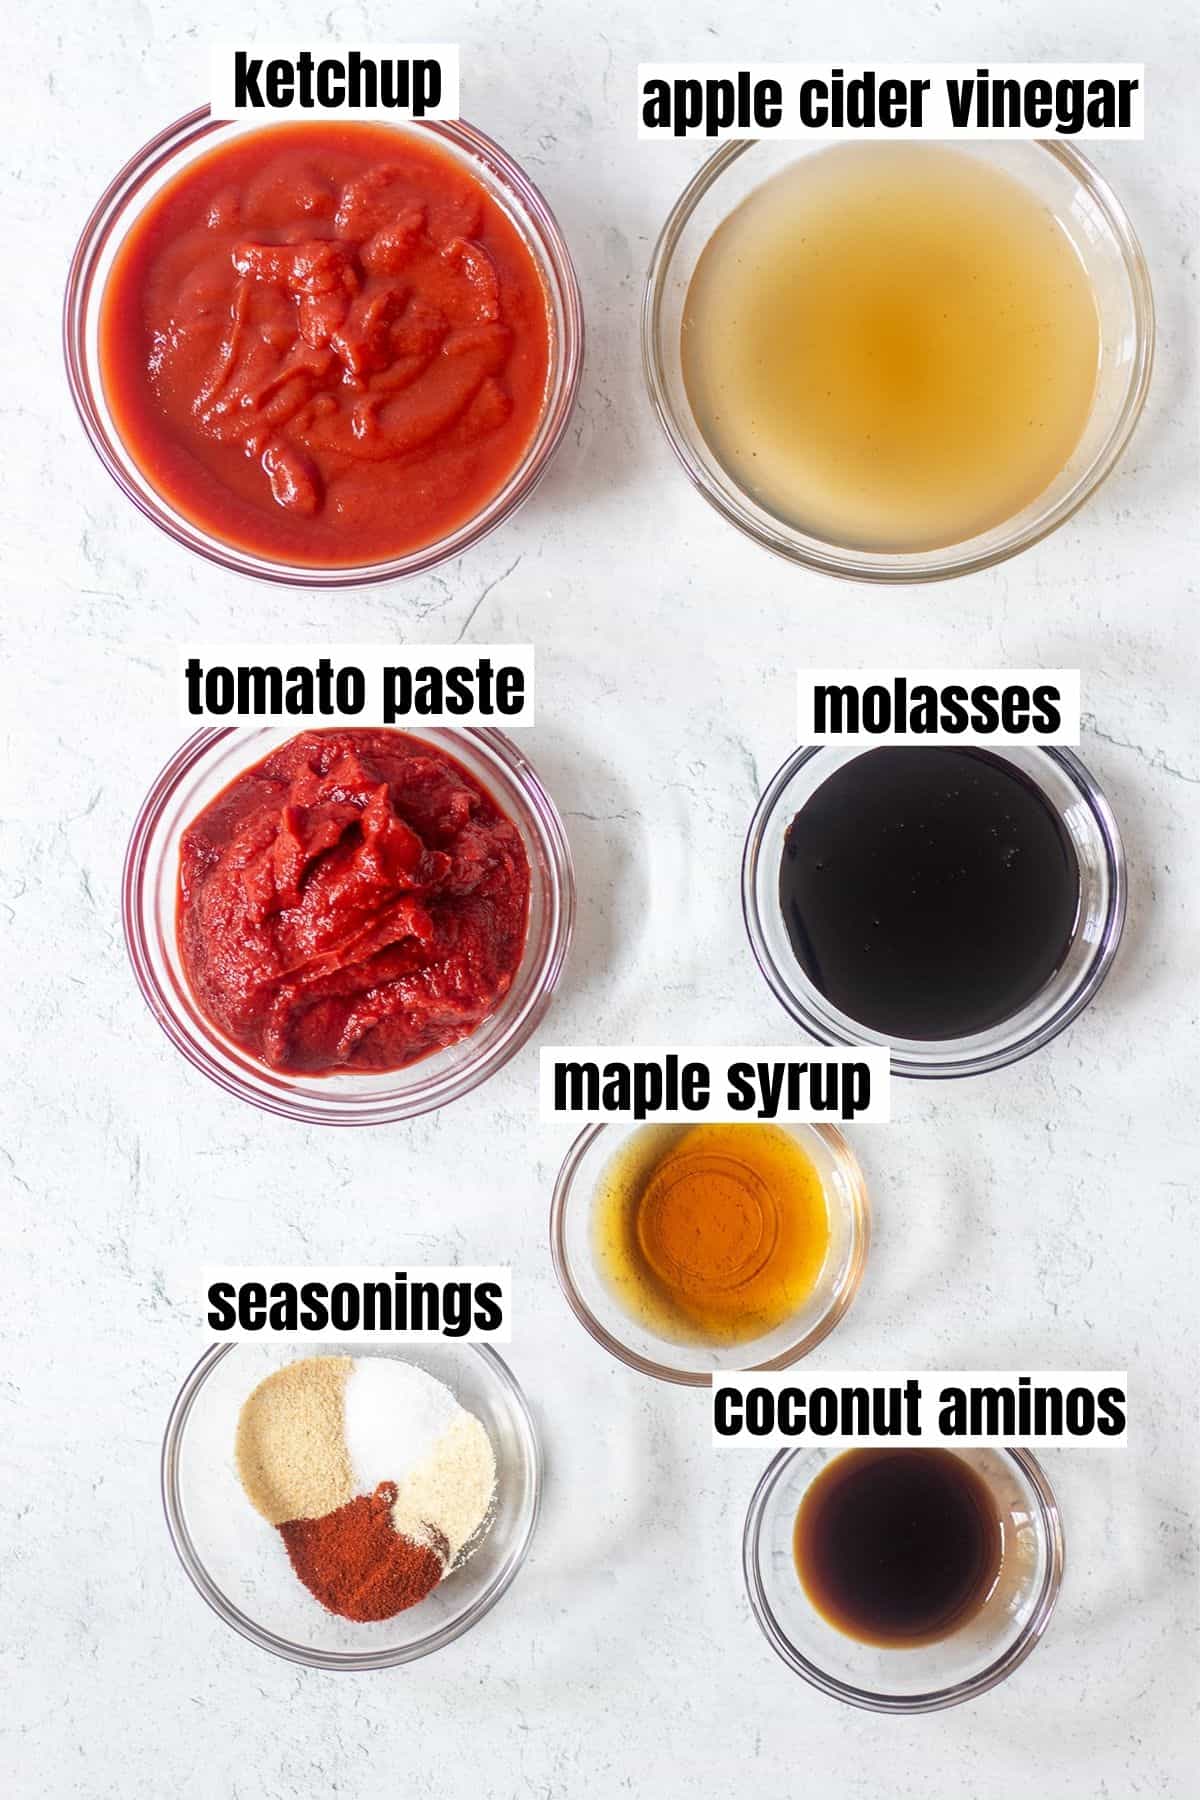 ketchup, apple cider vinegar, tomato paste, molasses, maple syrup, coconut aminos, seasonings.